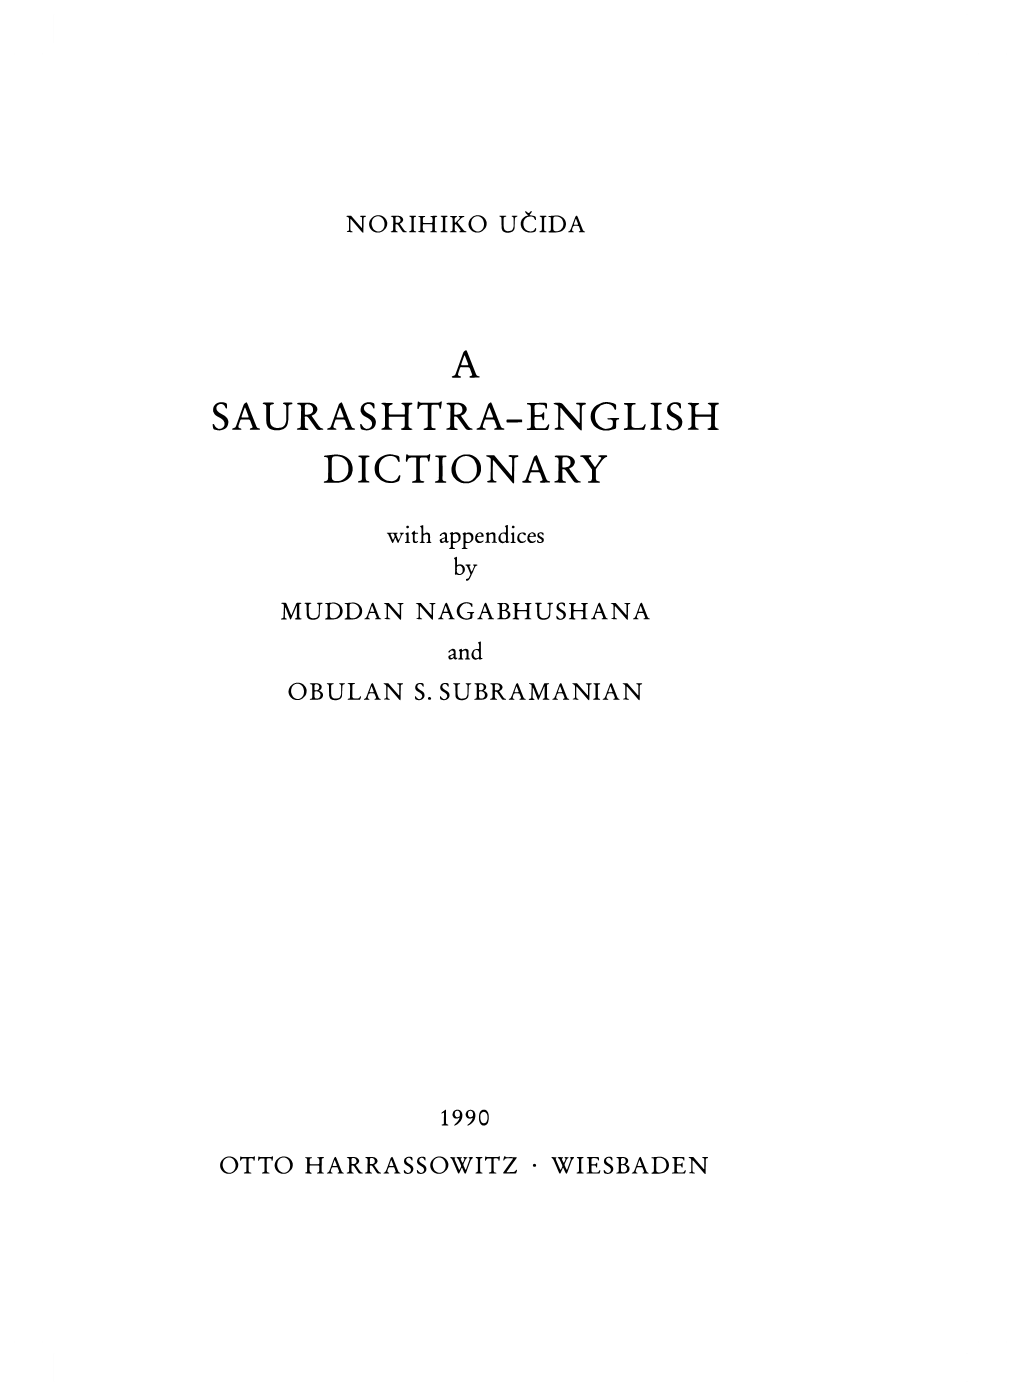 A Saurashtra-Eng Lish Dictionary